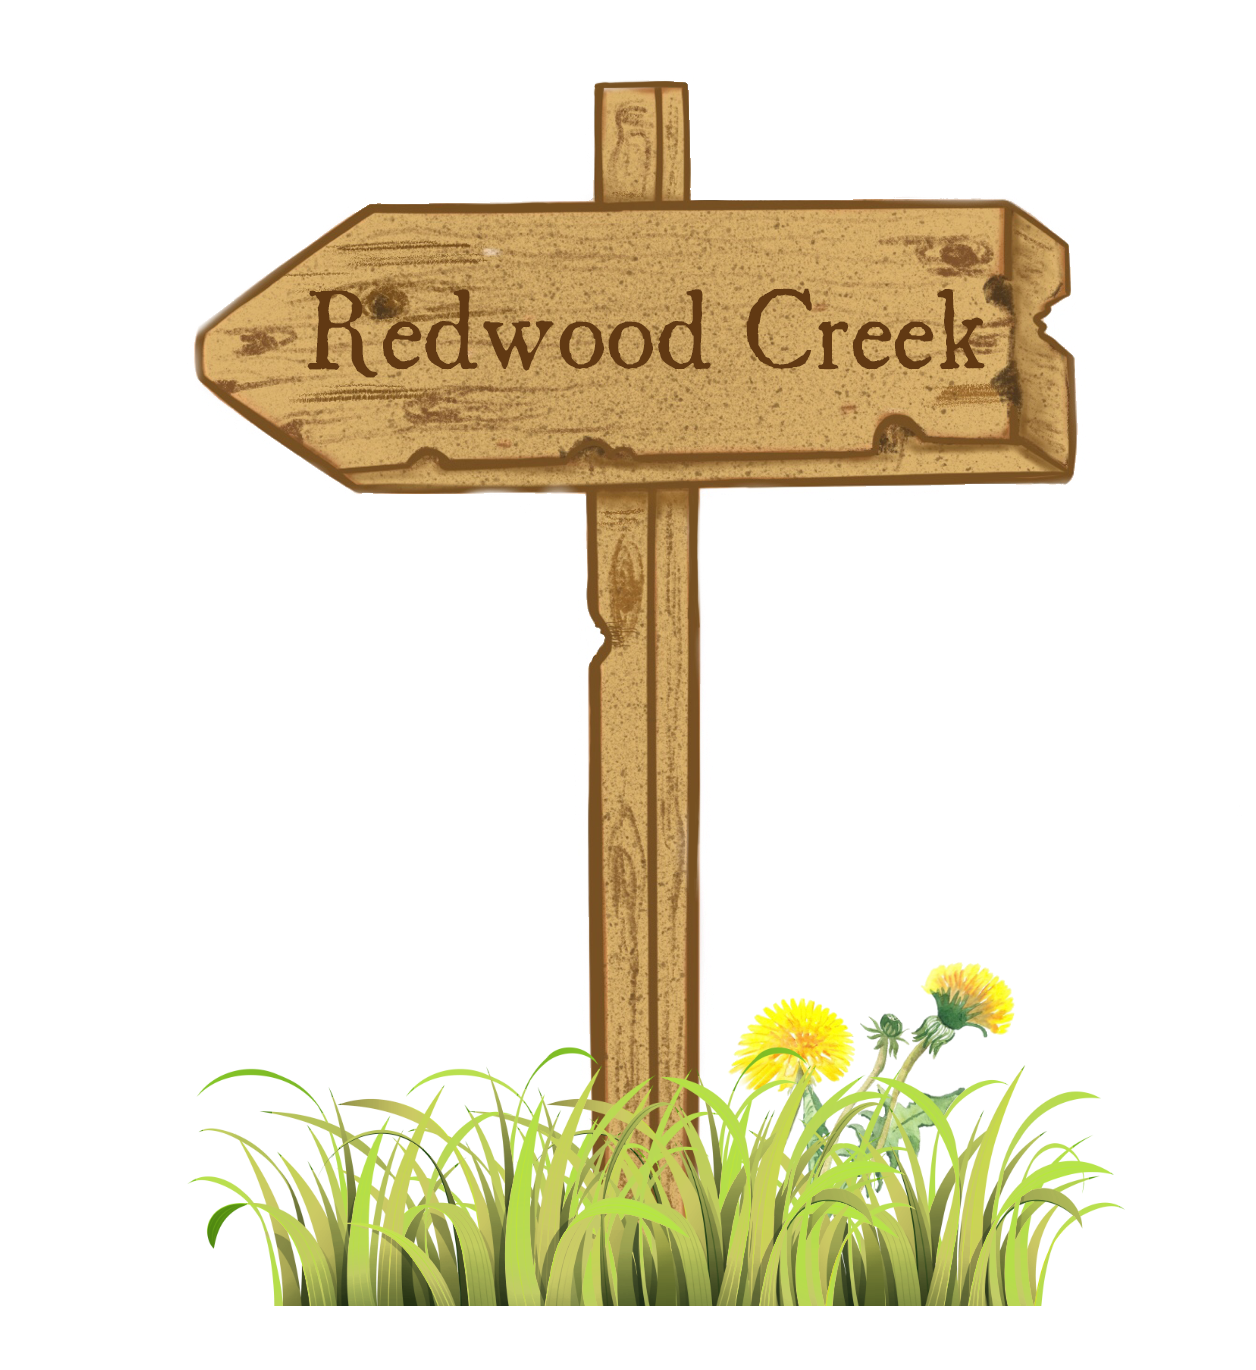 redwood creek sign with dandelions